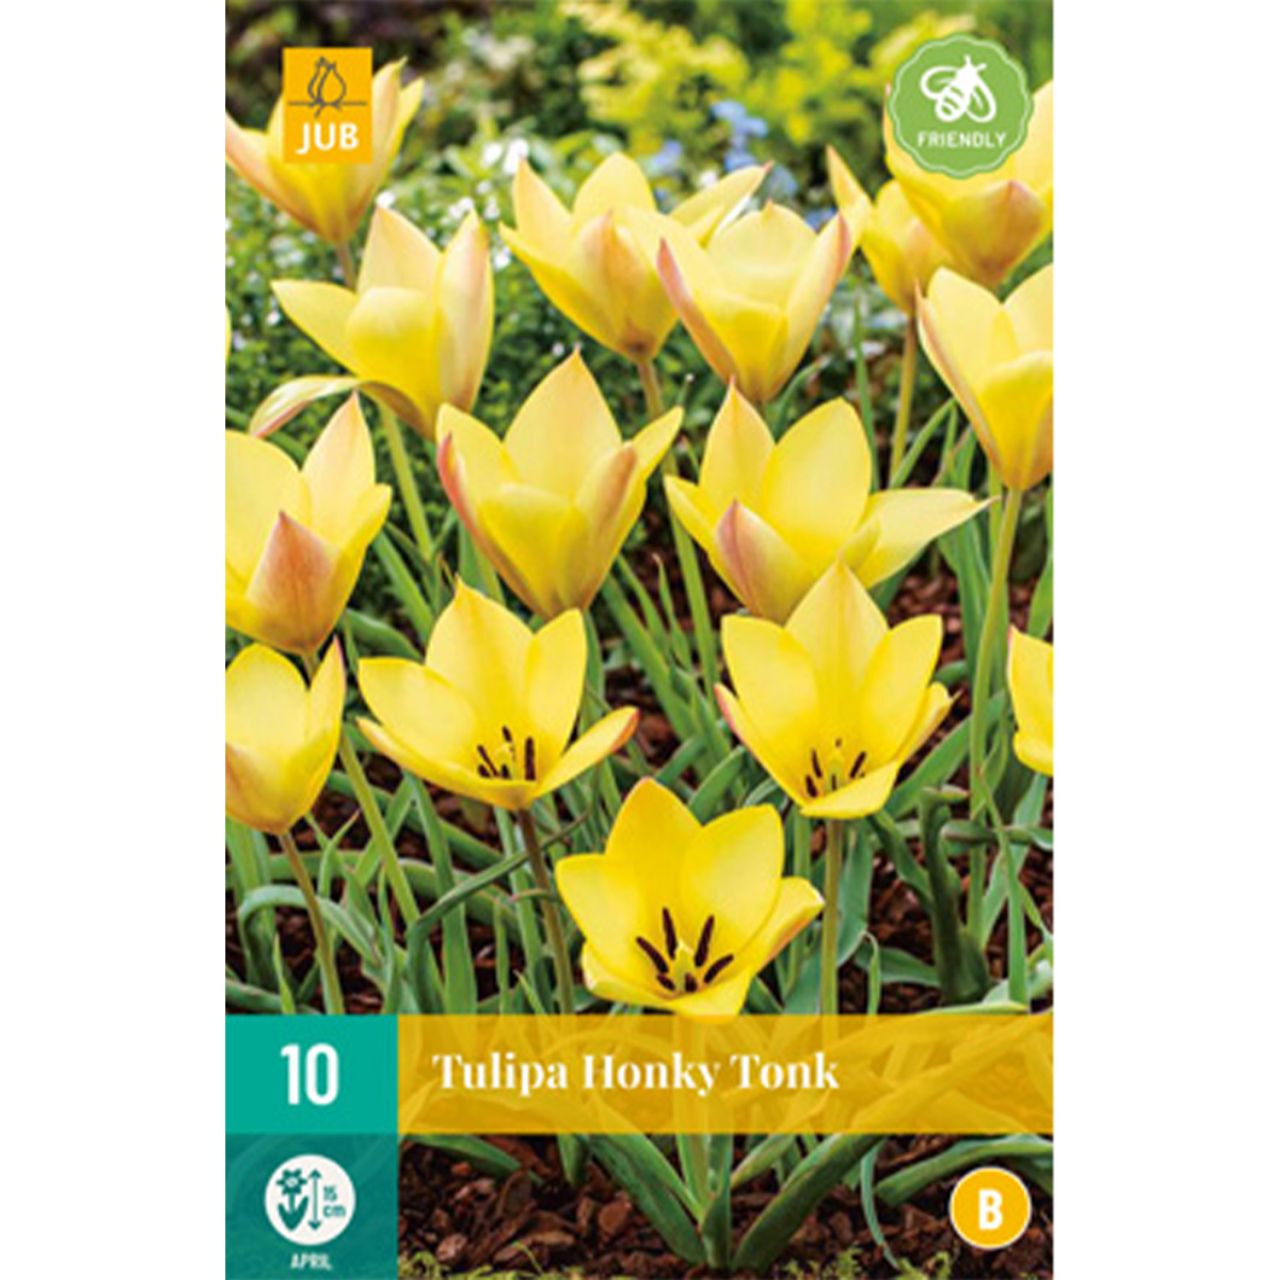 Kategorie <b>Herbst-Blumenzwiebeln </b> - Wildtulpe 'Honky Tonk' - 10 Stück - Tulipa